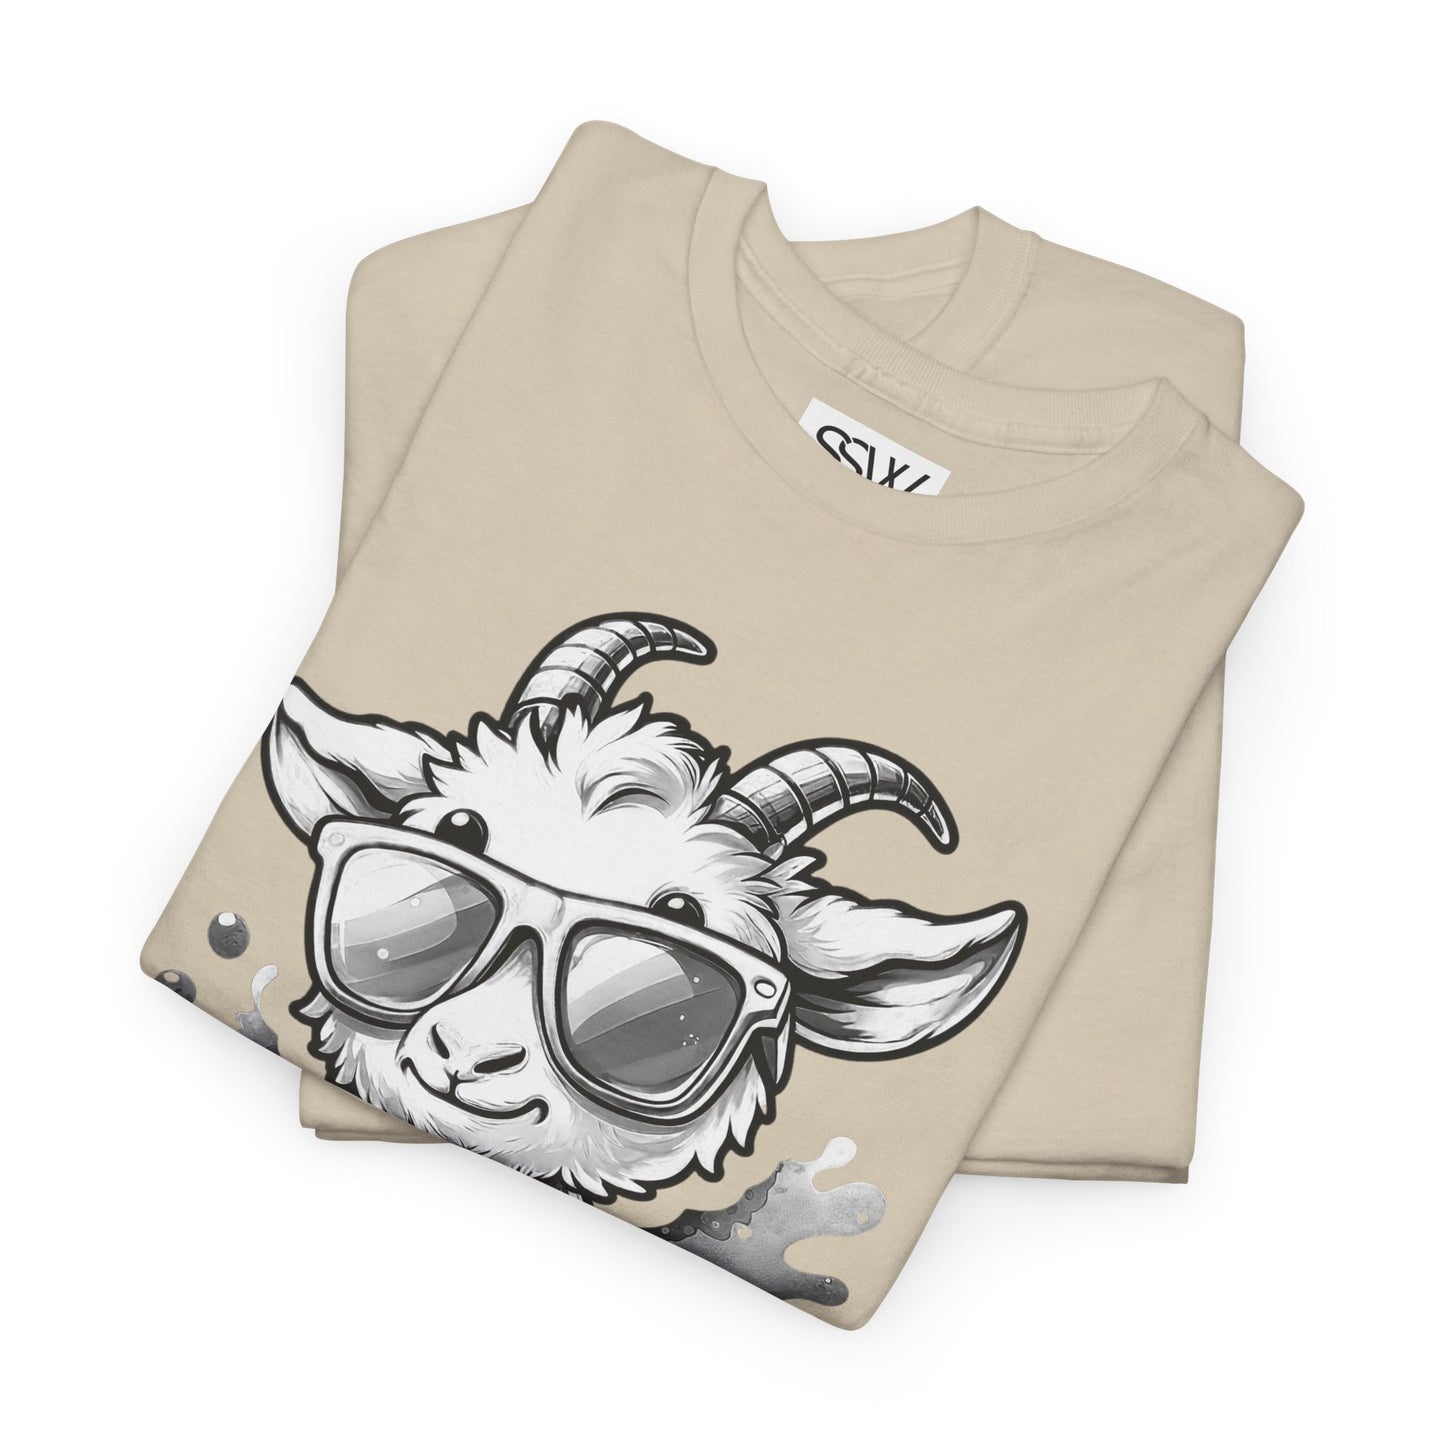 Beach Goat B&W Tee Shirt